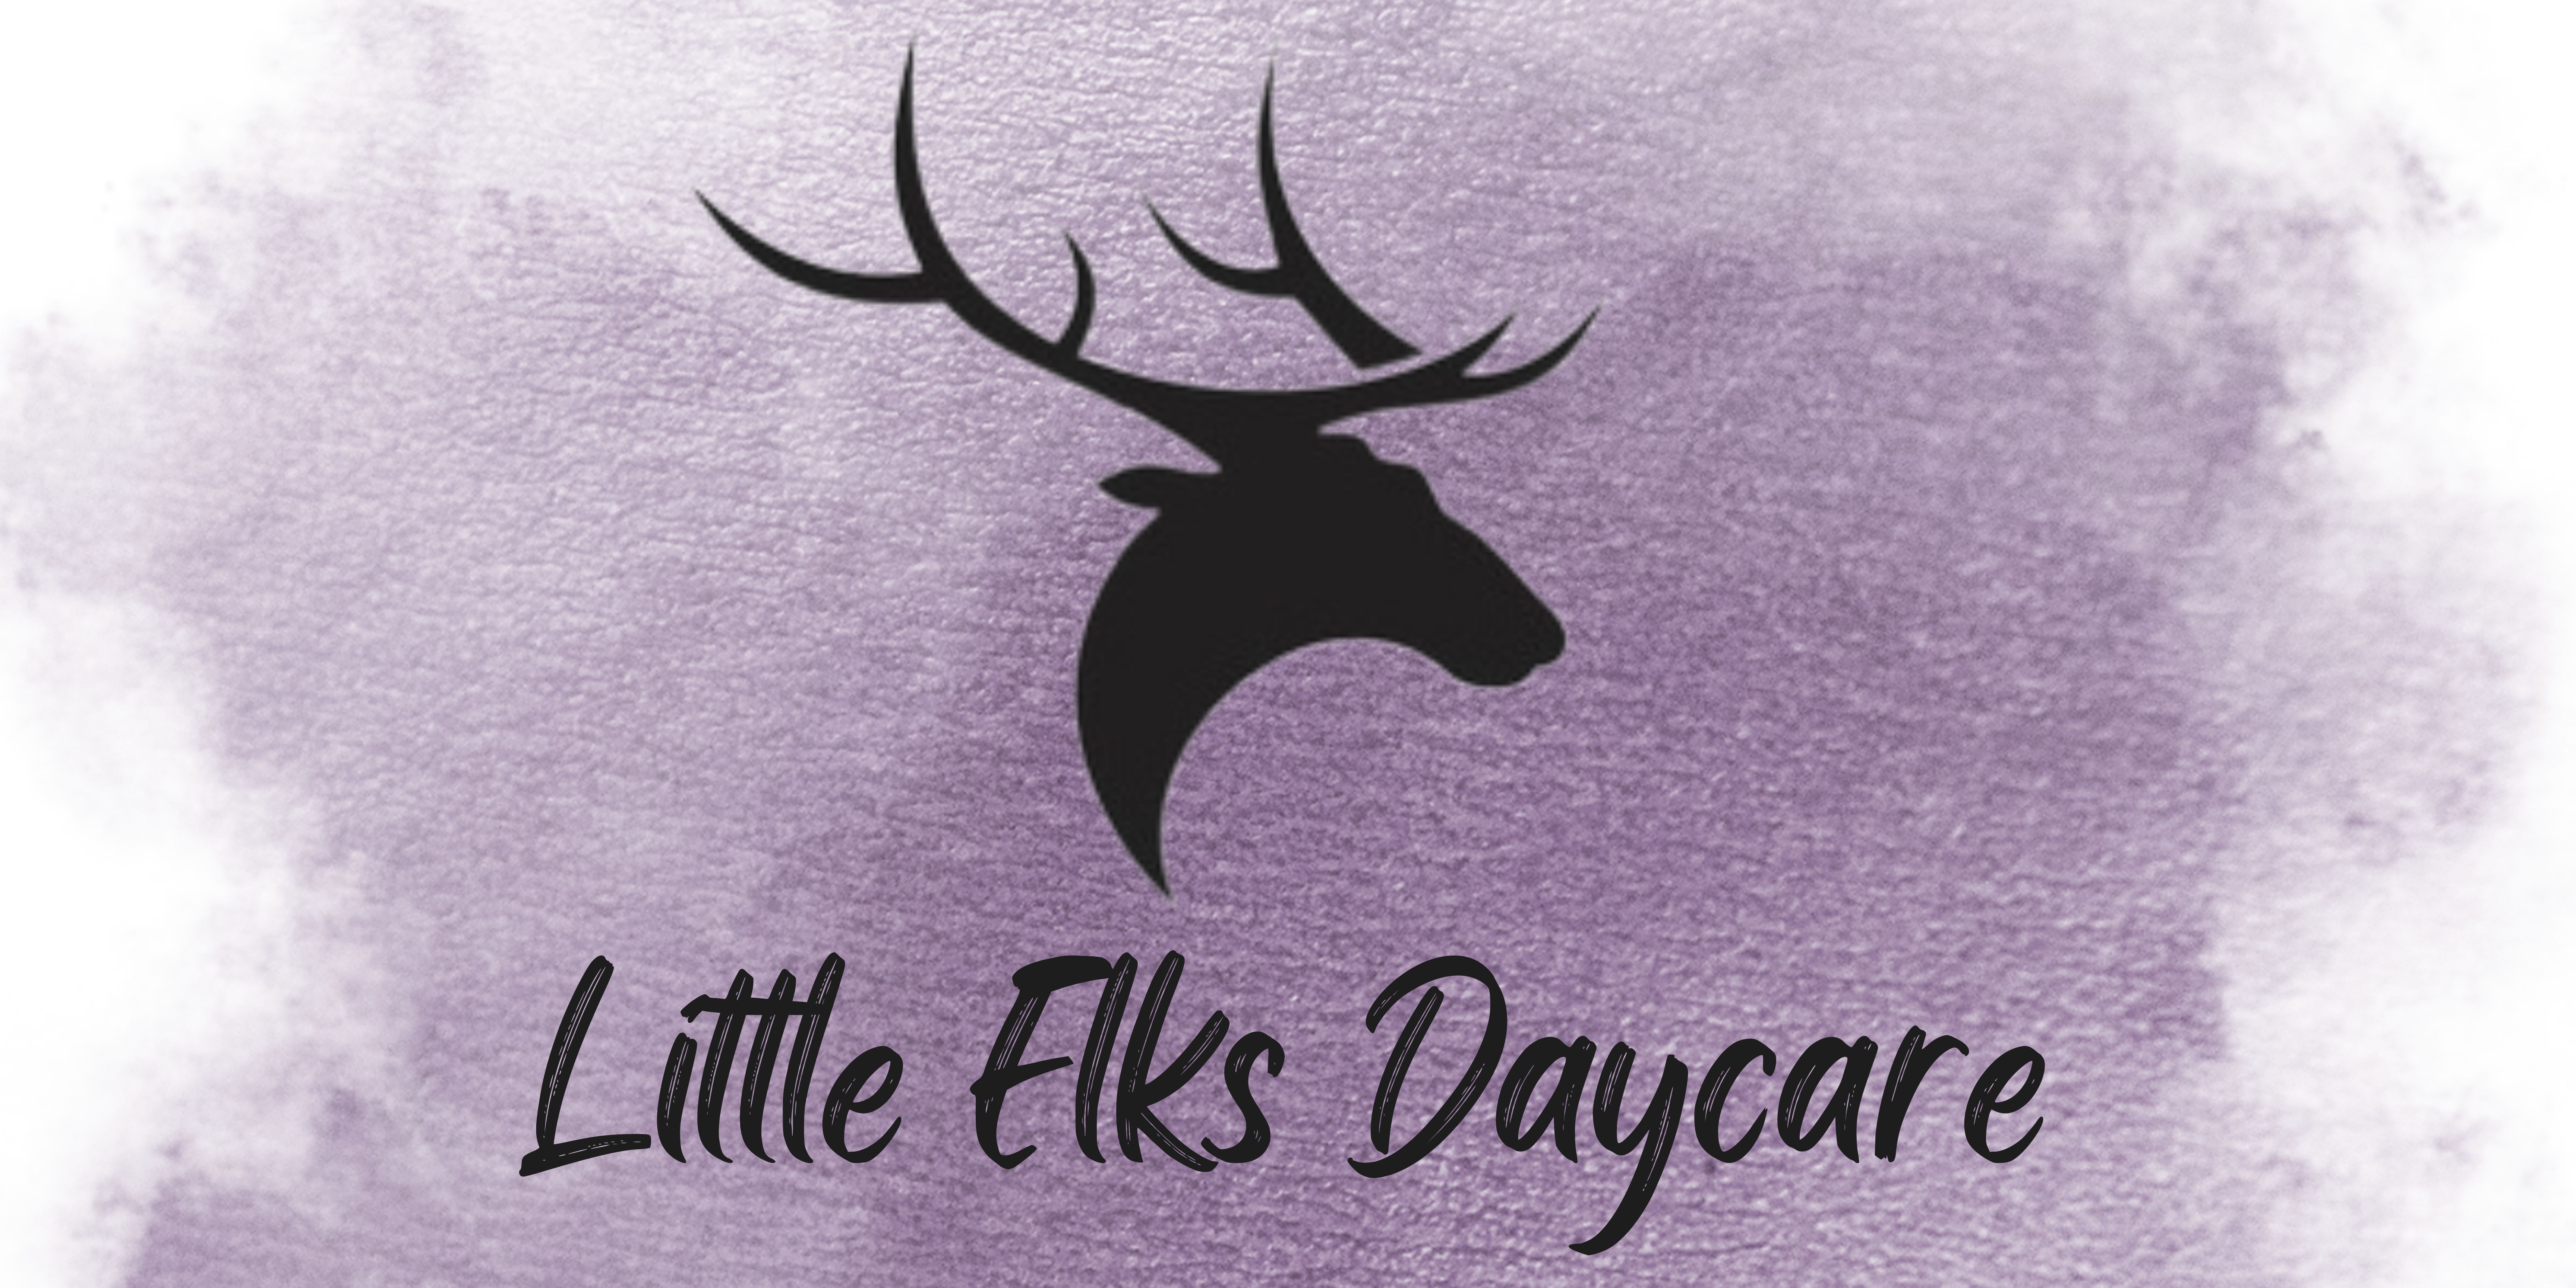 Little Elks Daycare